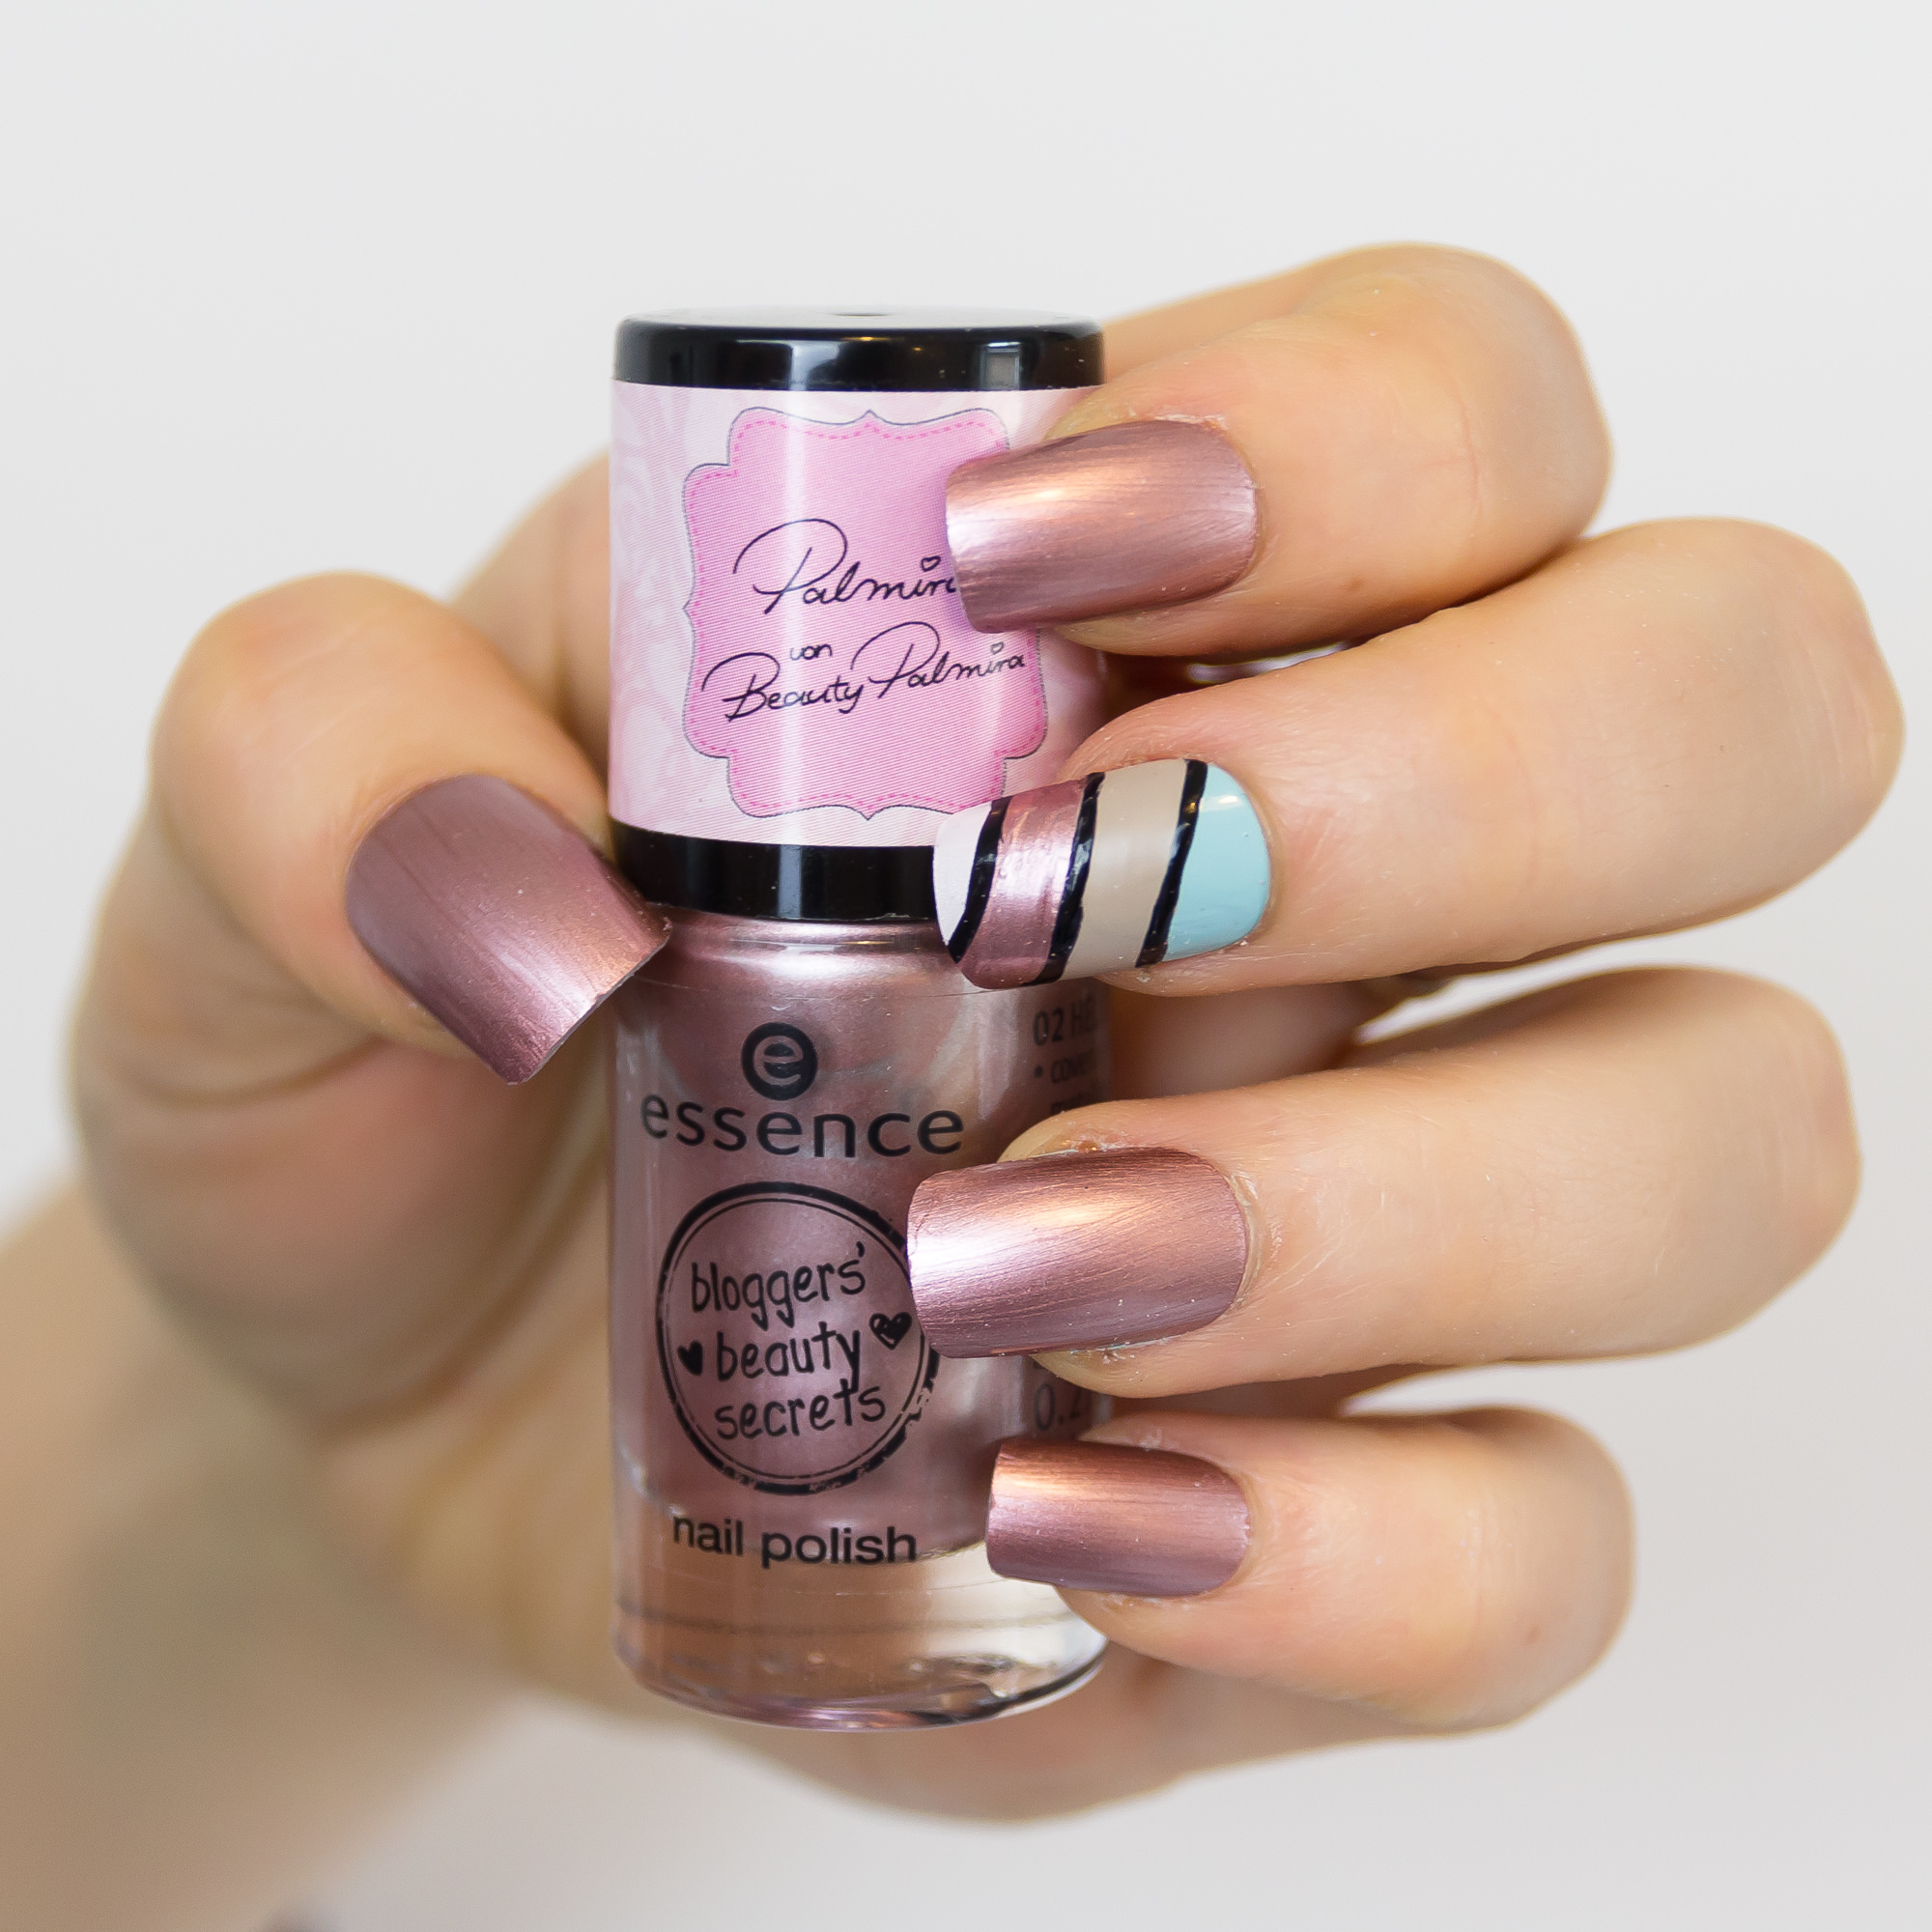 essence cosmetics bloggers beauty secrets nail polishes